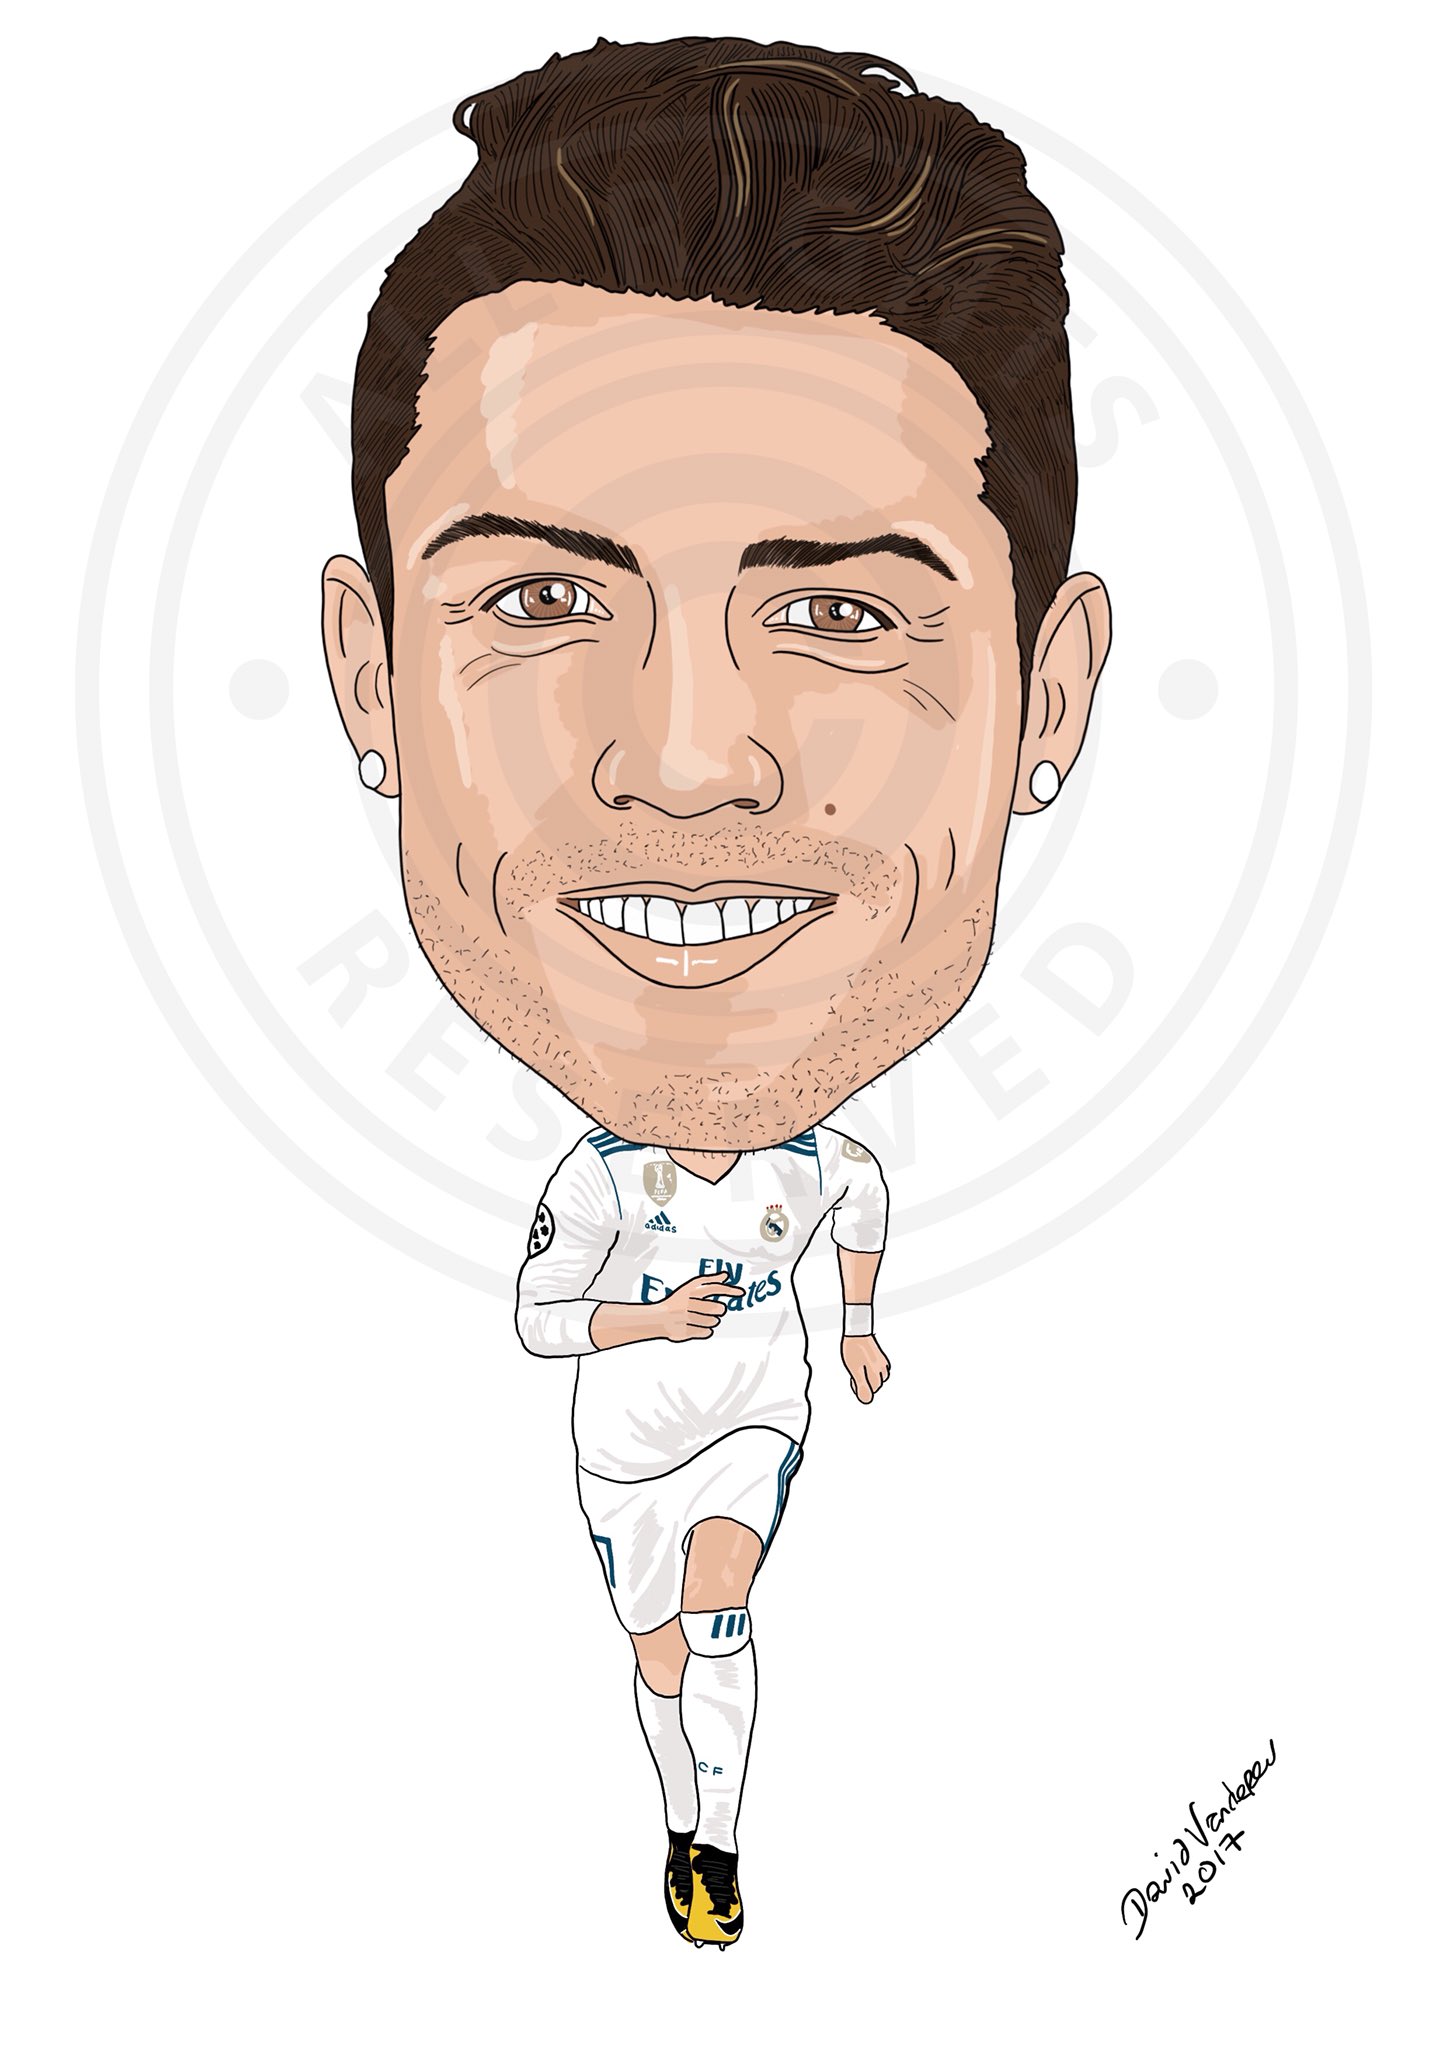 Cartoons by Dave on Twitter: "Ronaldo cartoon #RealMadrid #ronaldo